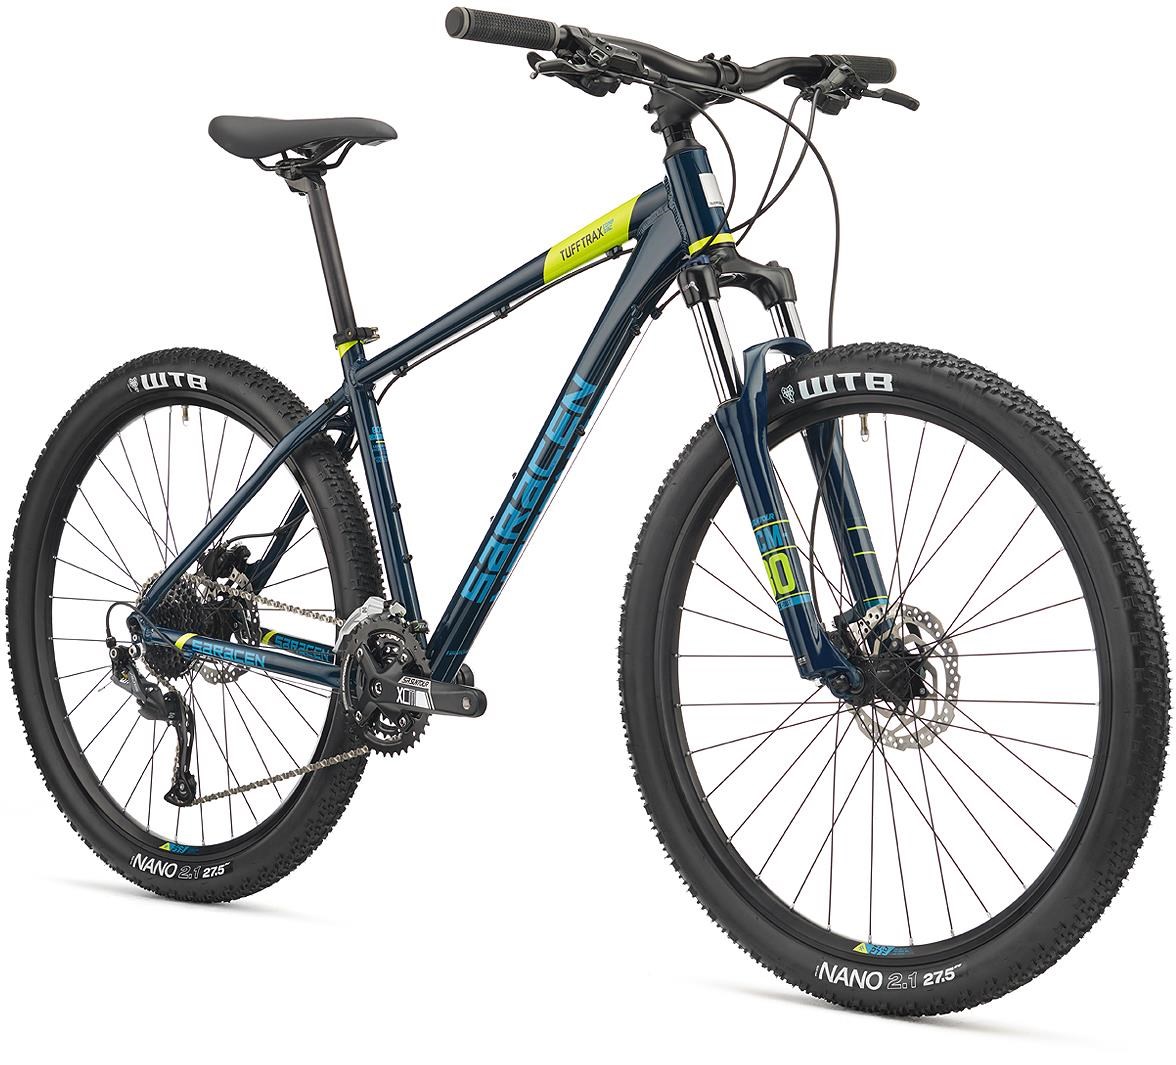 Saracen Tufftrax Comp Disc 27.5" Mountain Bike 2018 - Hardtail MTB product image